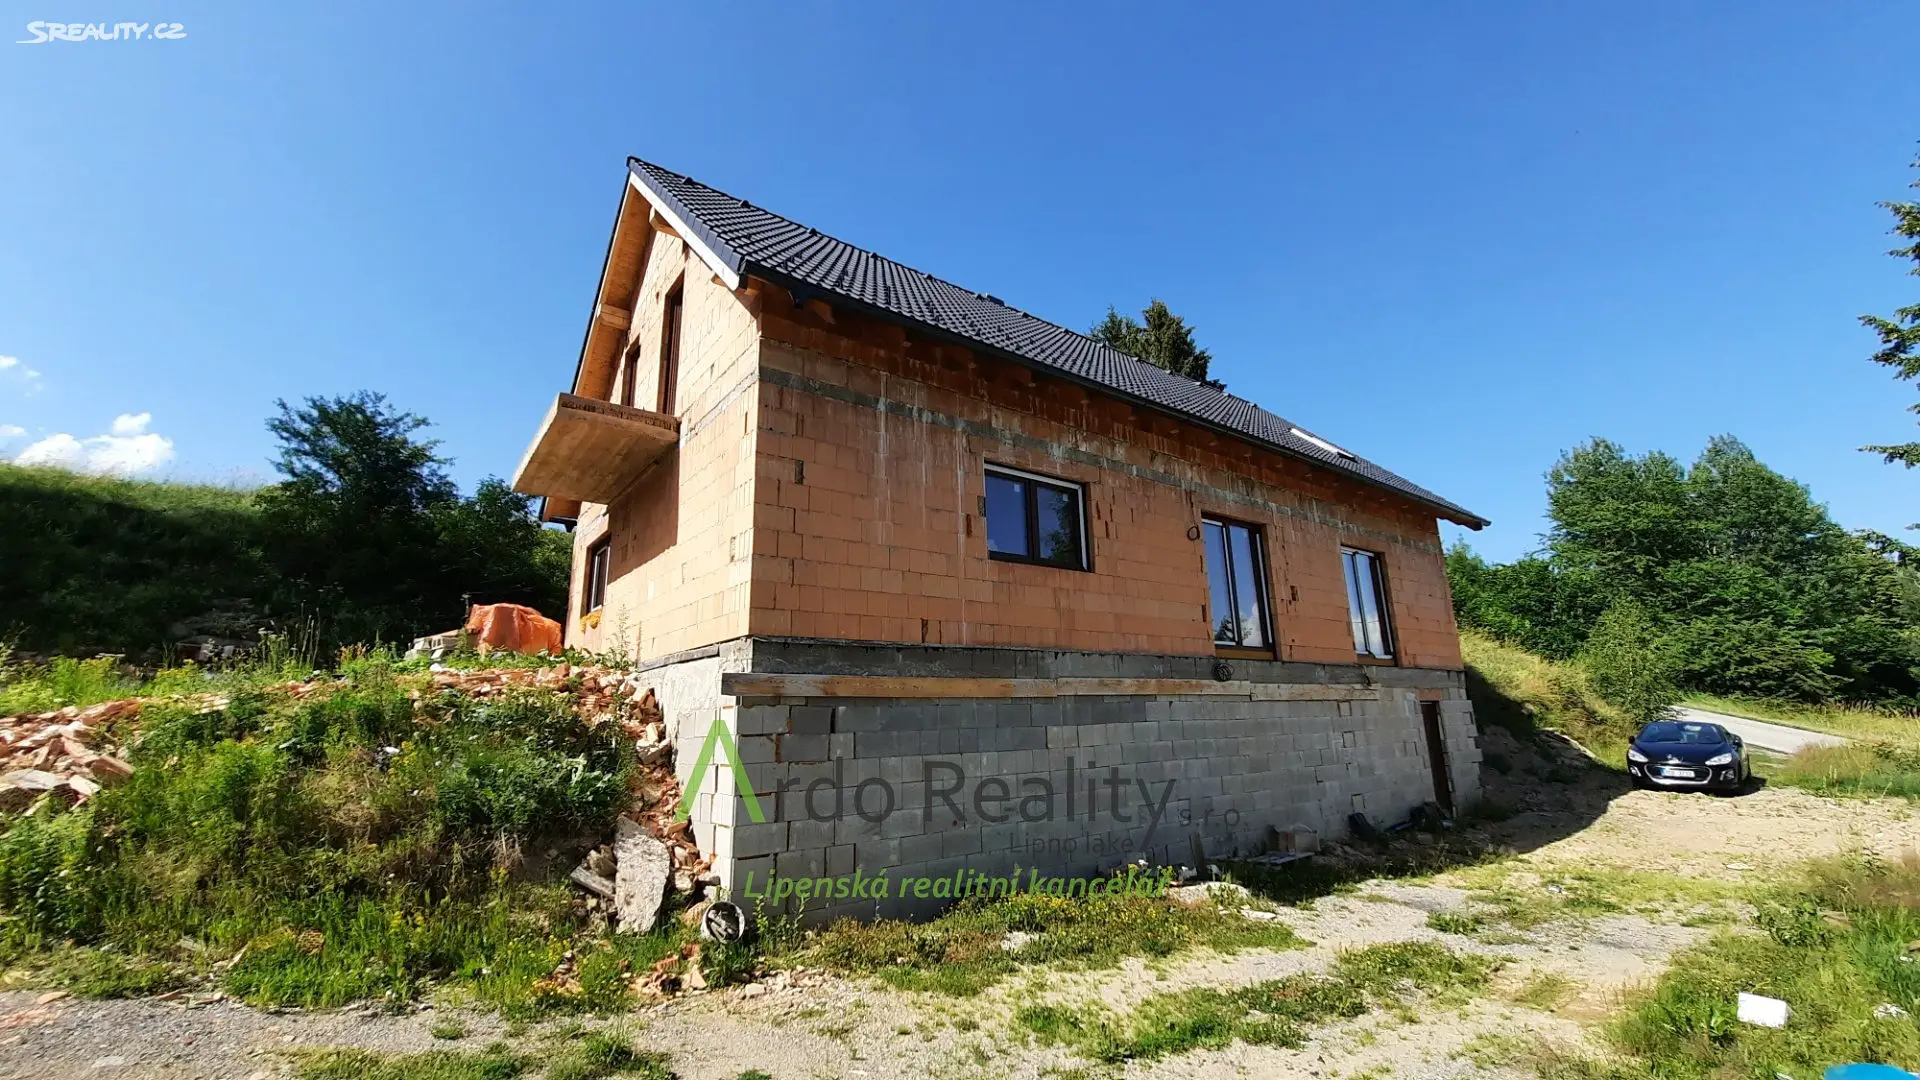 Prodej  rodinného domu 255 m², pozemek 2 812 m², Malšín - Ostrov, okres Český Krumlov